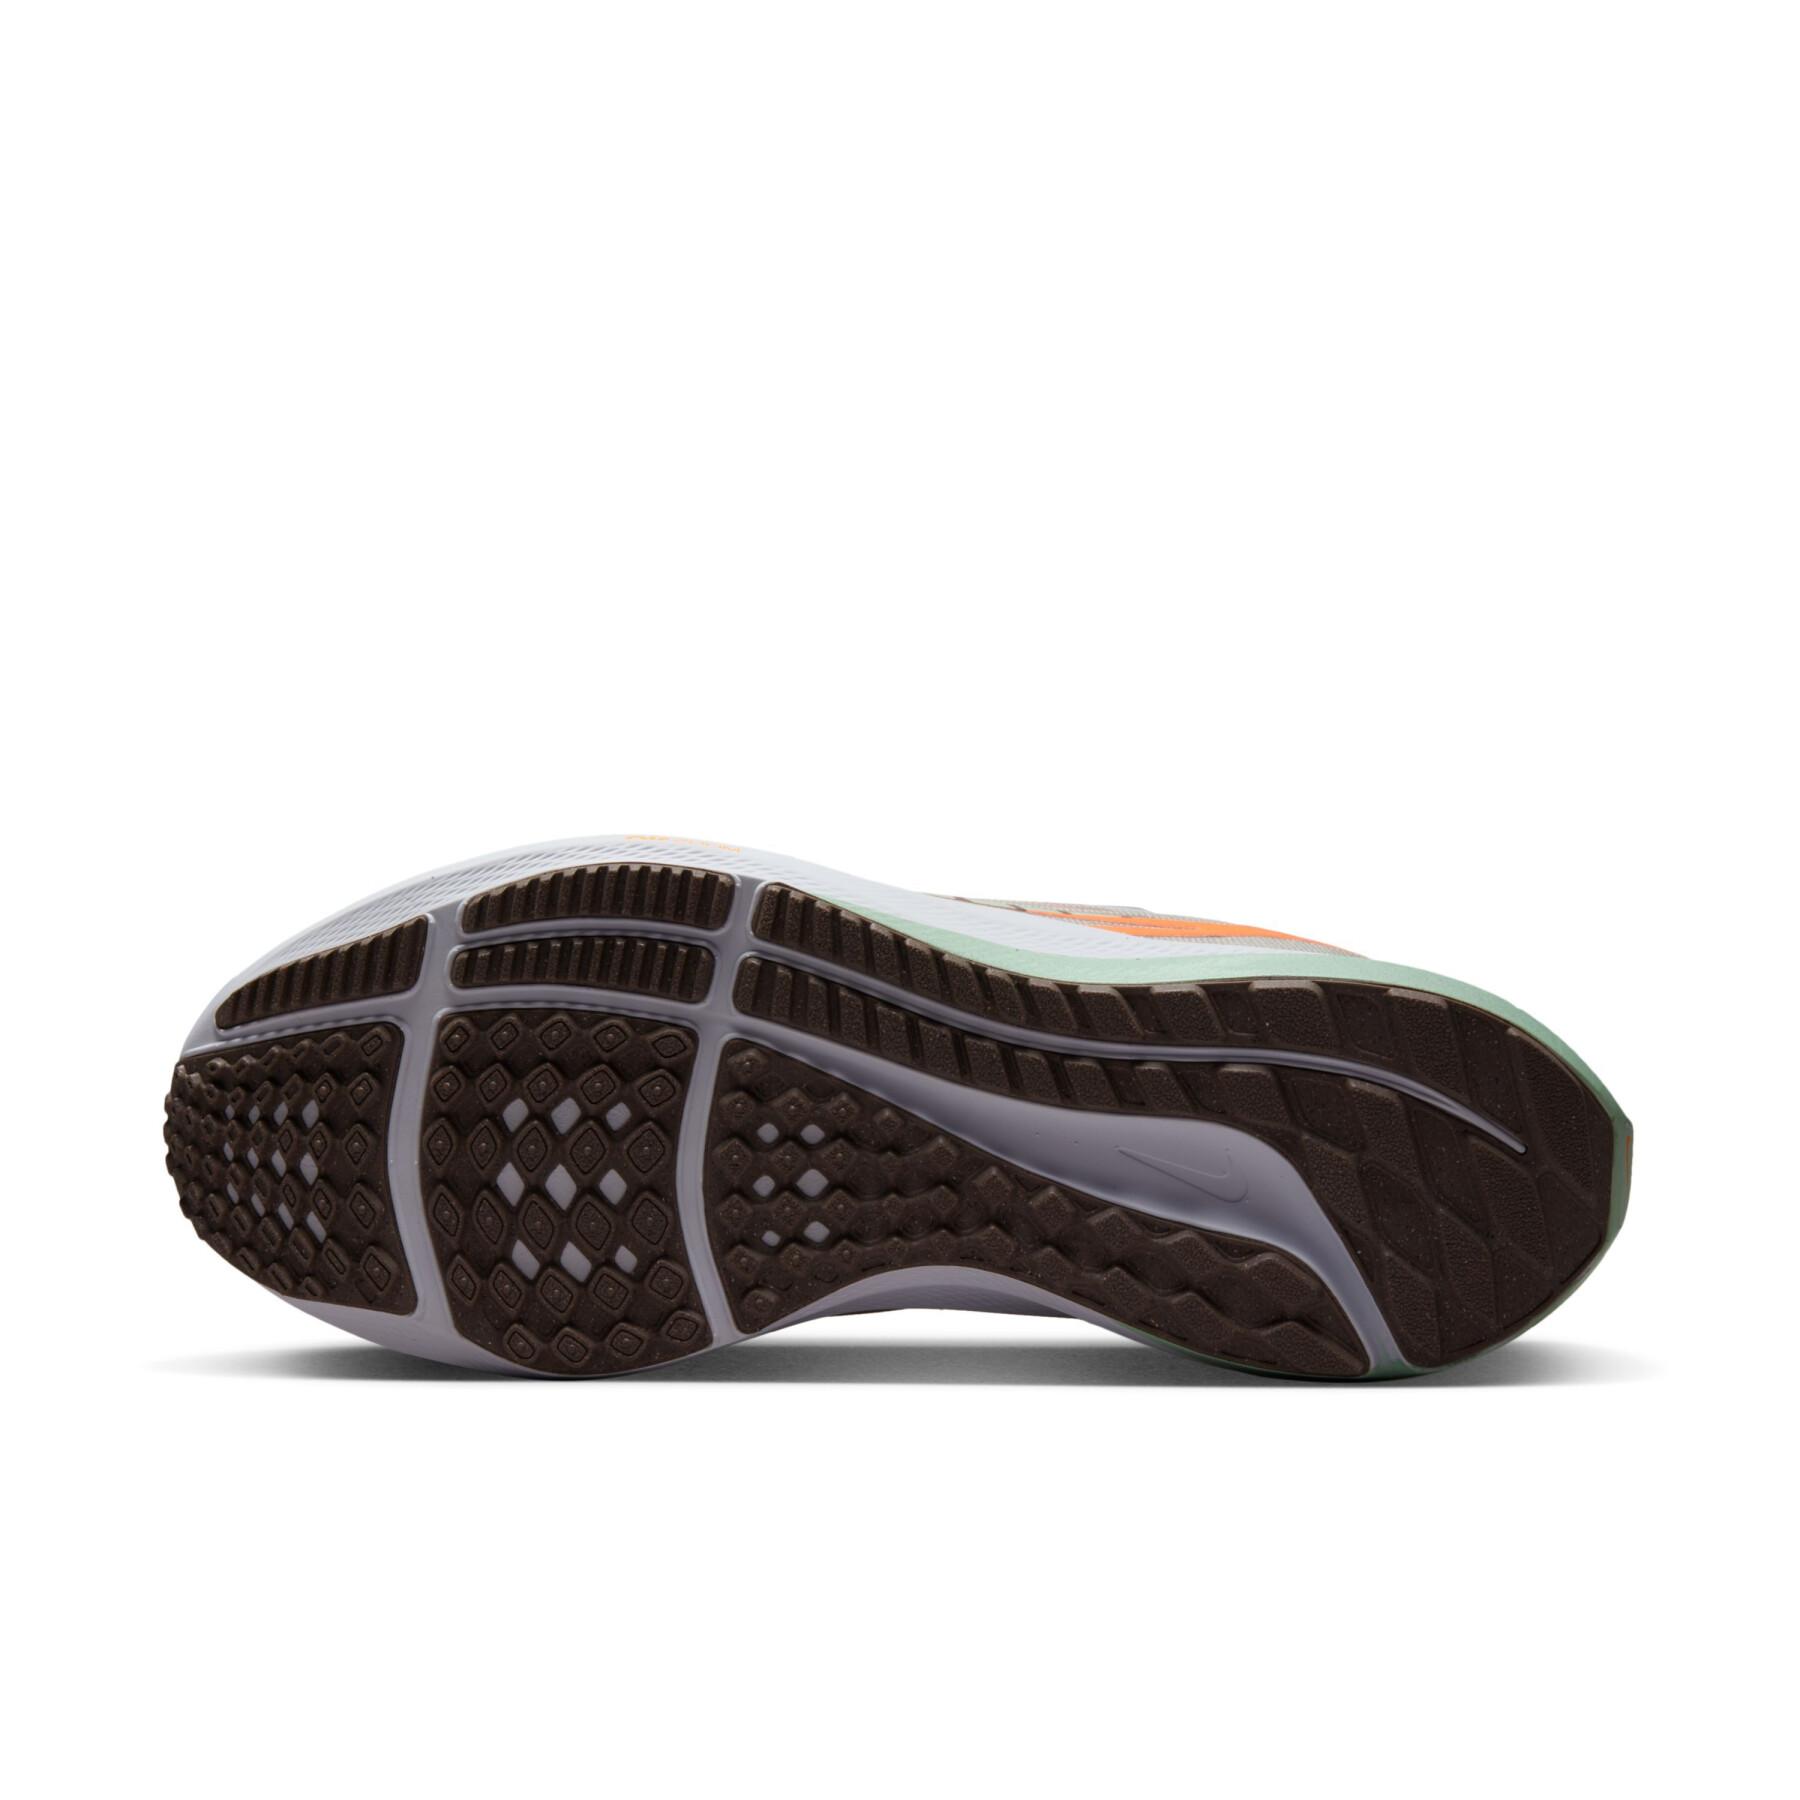 Buty do biegania dla kobiet Nike Air ZooPegasus 39 Premium